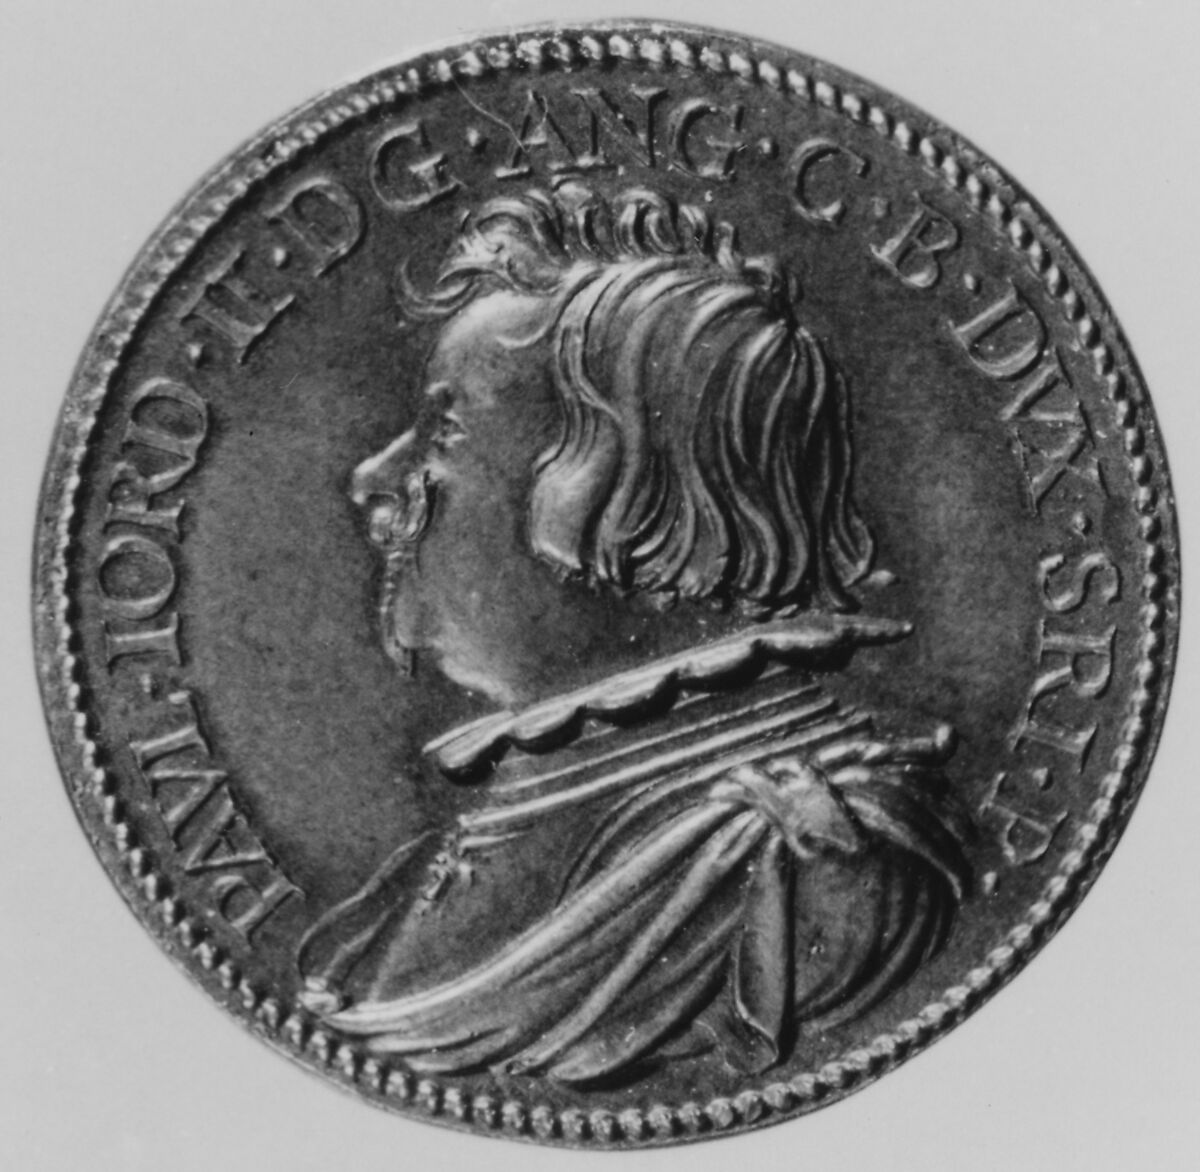 Paolo Giordano II Orsini, Duke of Bracciano (1591–1656), Medalist: Johann Jakob Kornmann (called Cormano) (born Augsburg 1620, active Rome, died after 1672), Bronze, struck, German 